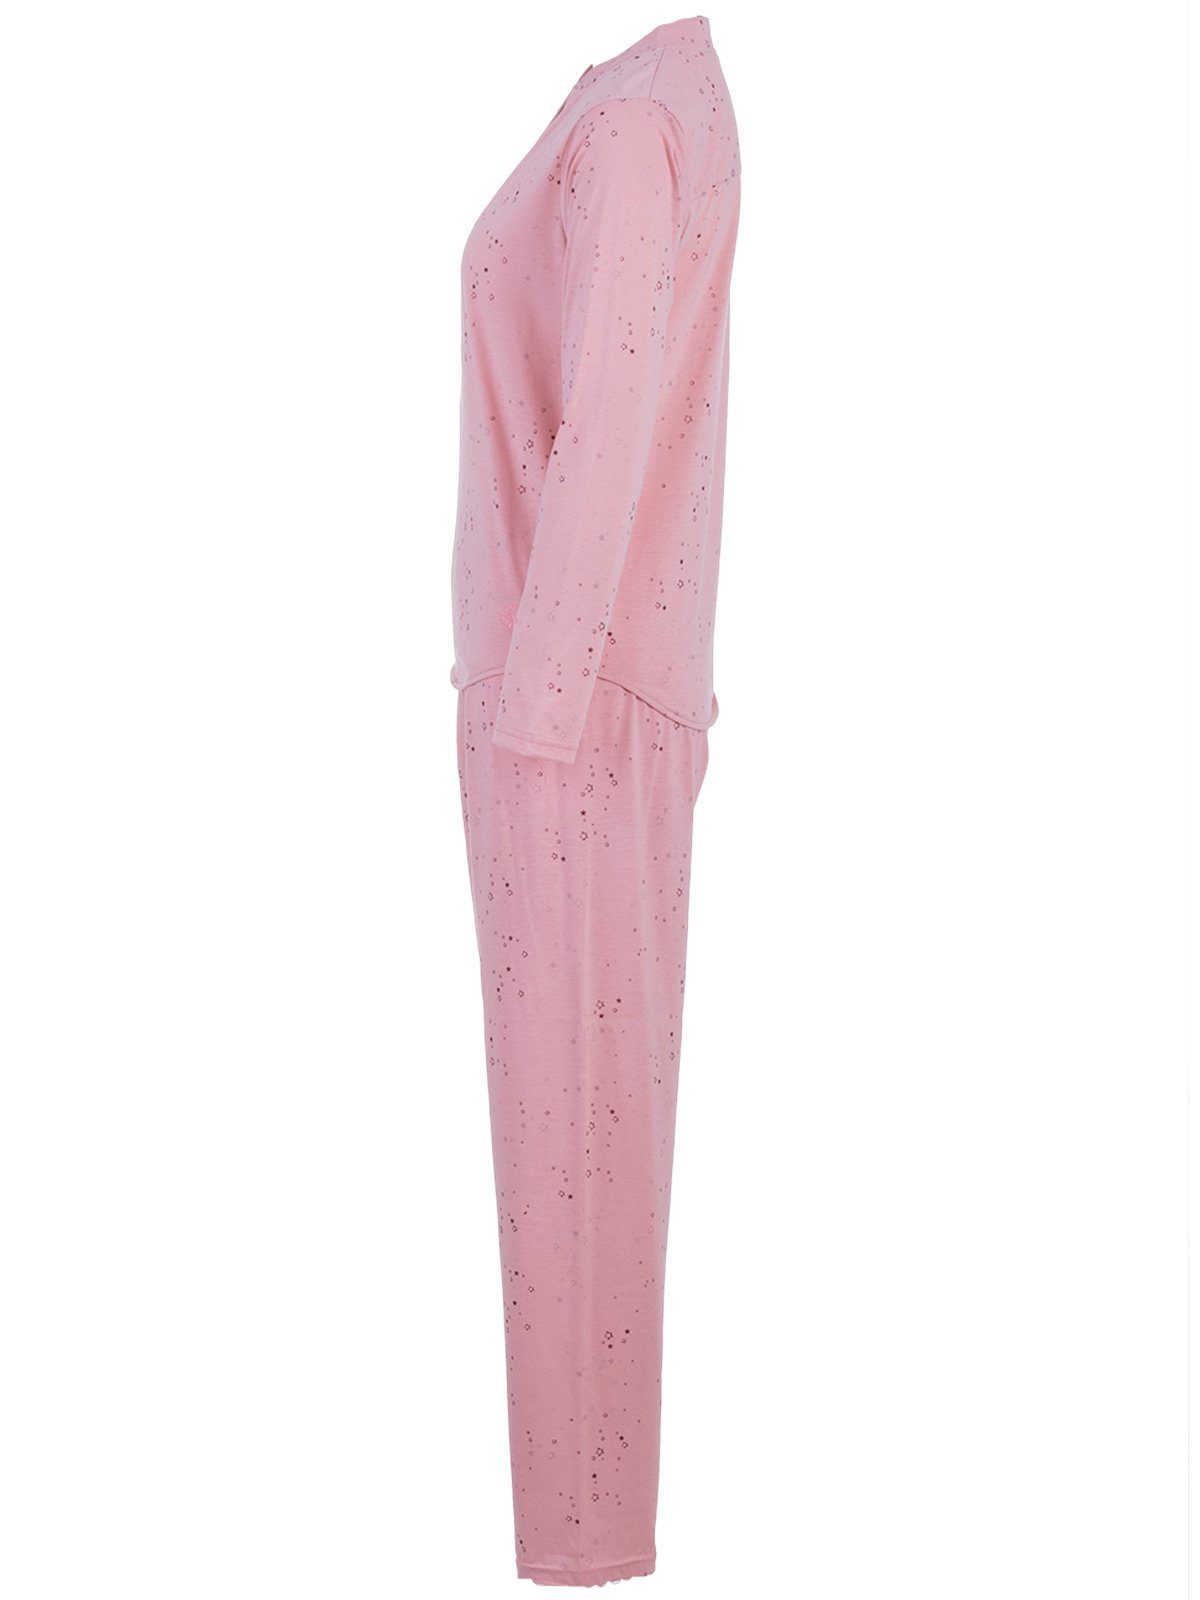 zeitlos Schlafanzug Pyjama Langarm - rosa Sterne Set